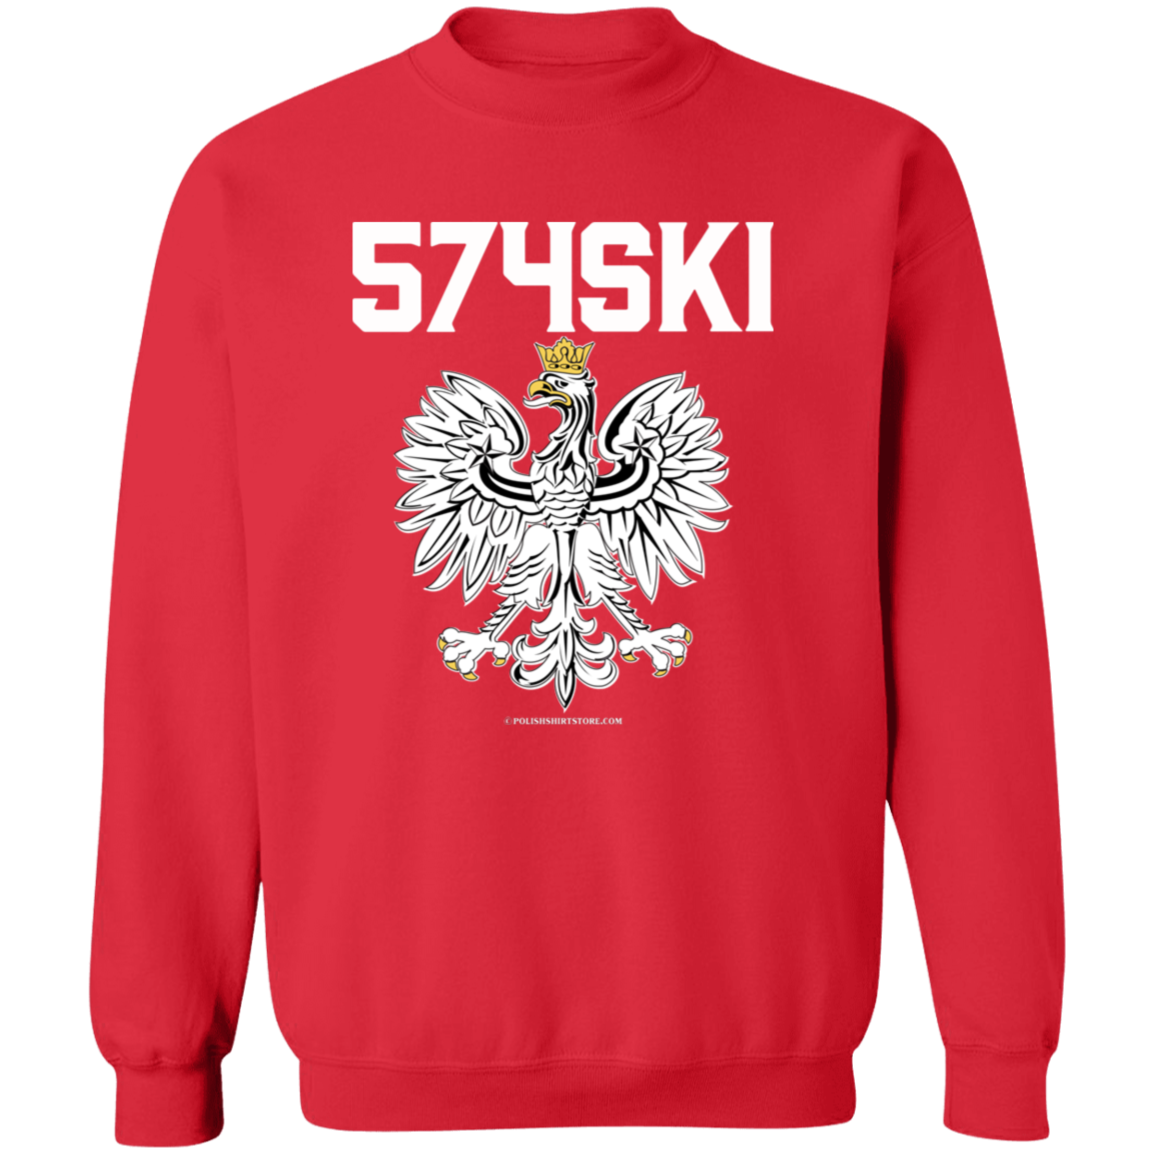 574SKI Apparel CustomCat G180 Crewneck Pullover Sweatshirt Red S